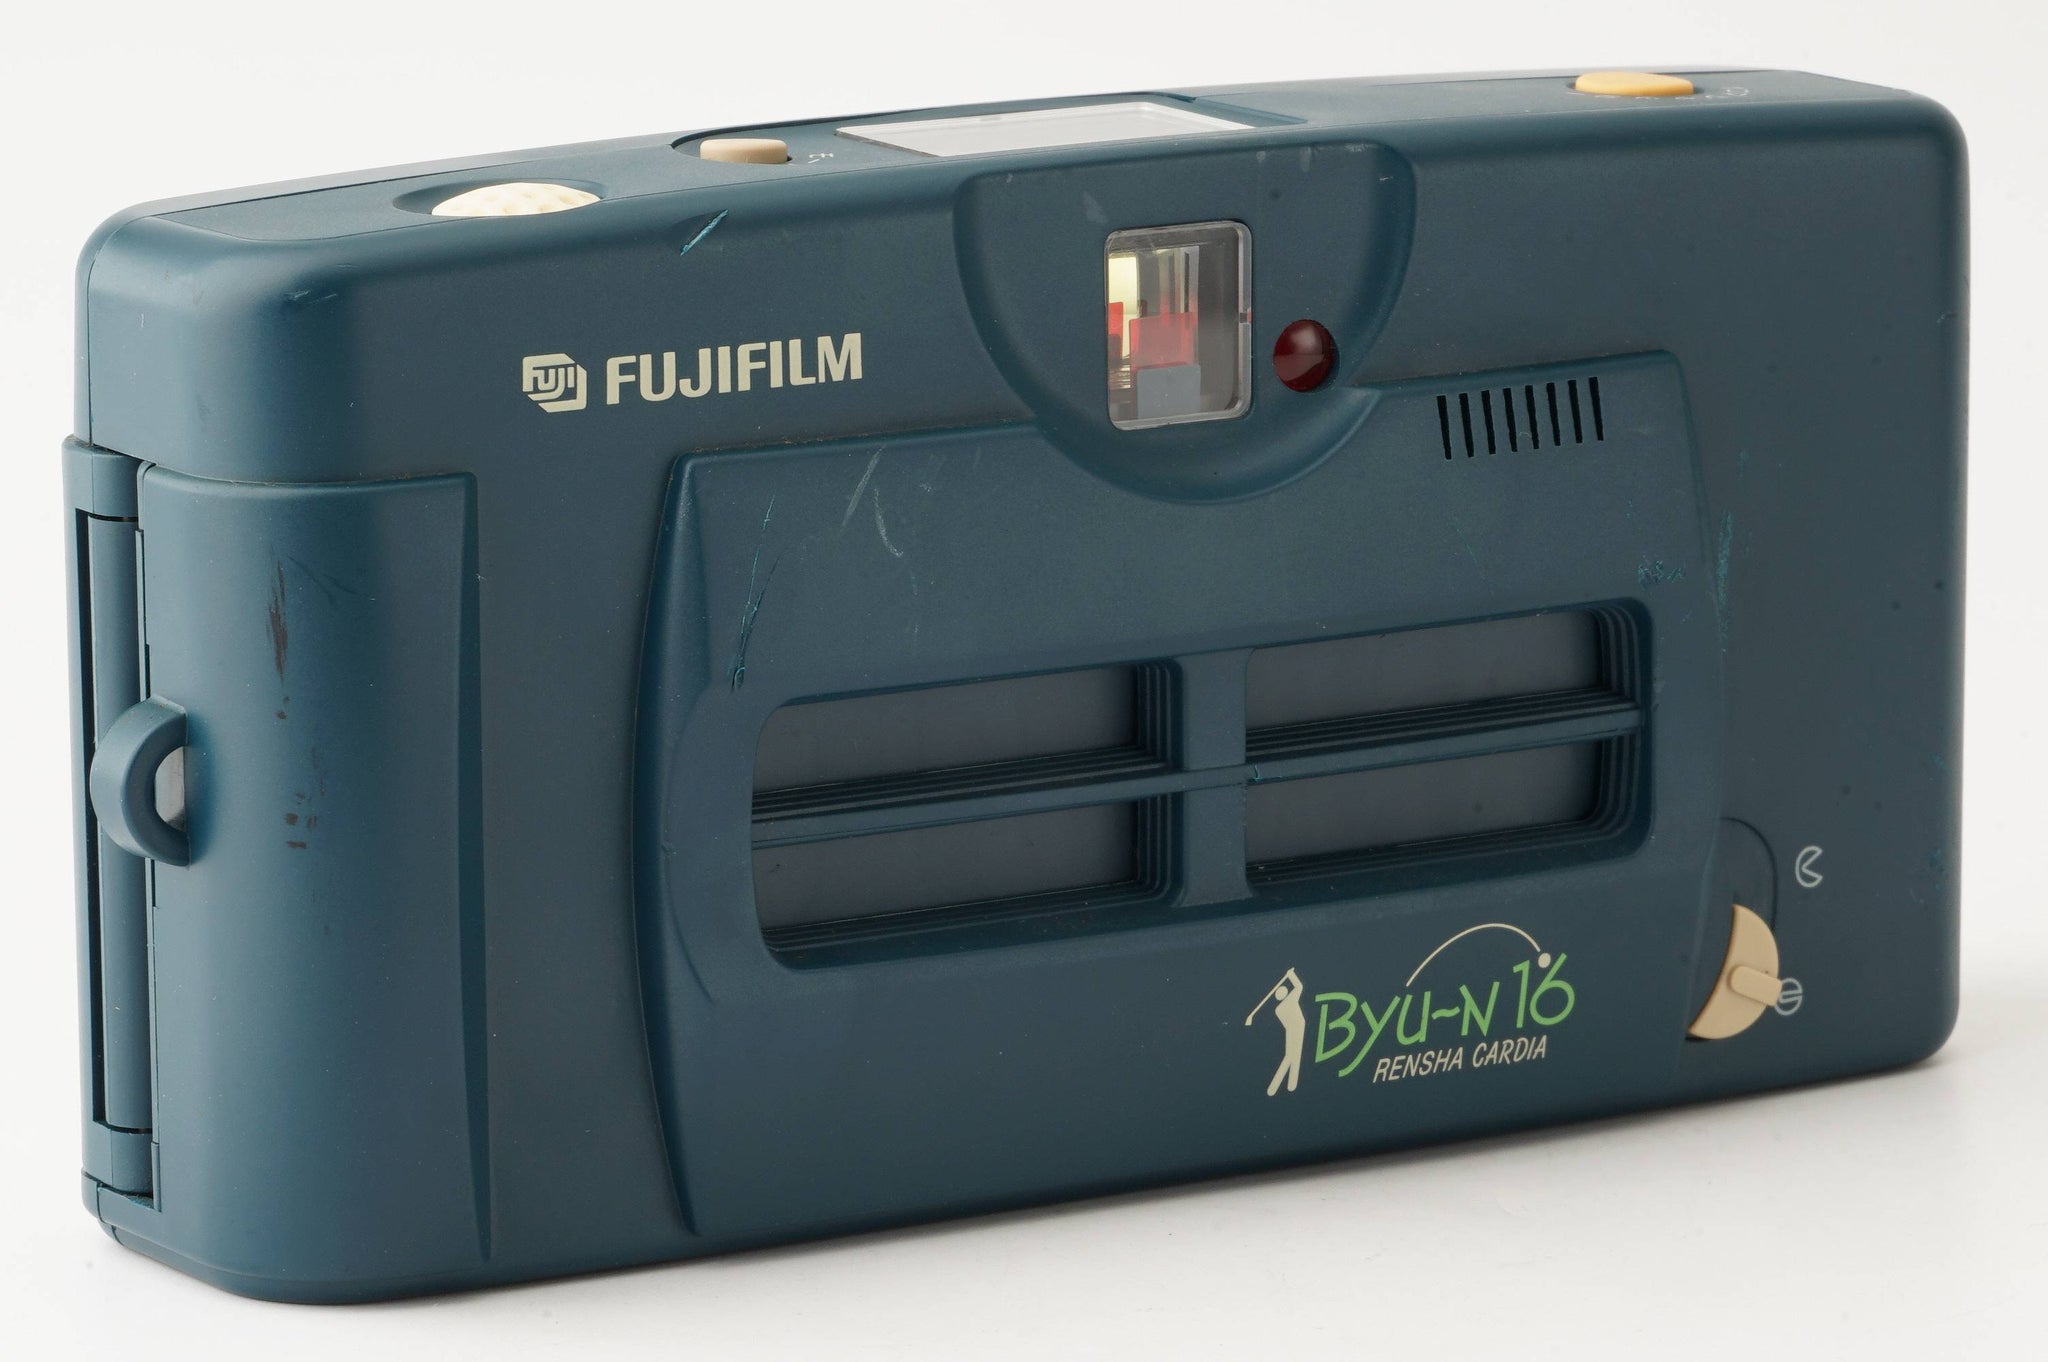 Fujifilm Byu-N 16 RENSHA CARDIA – Natural Camera / ナチュラルカメラ